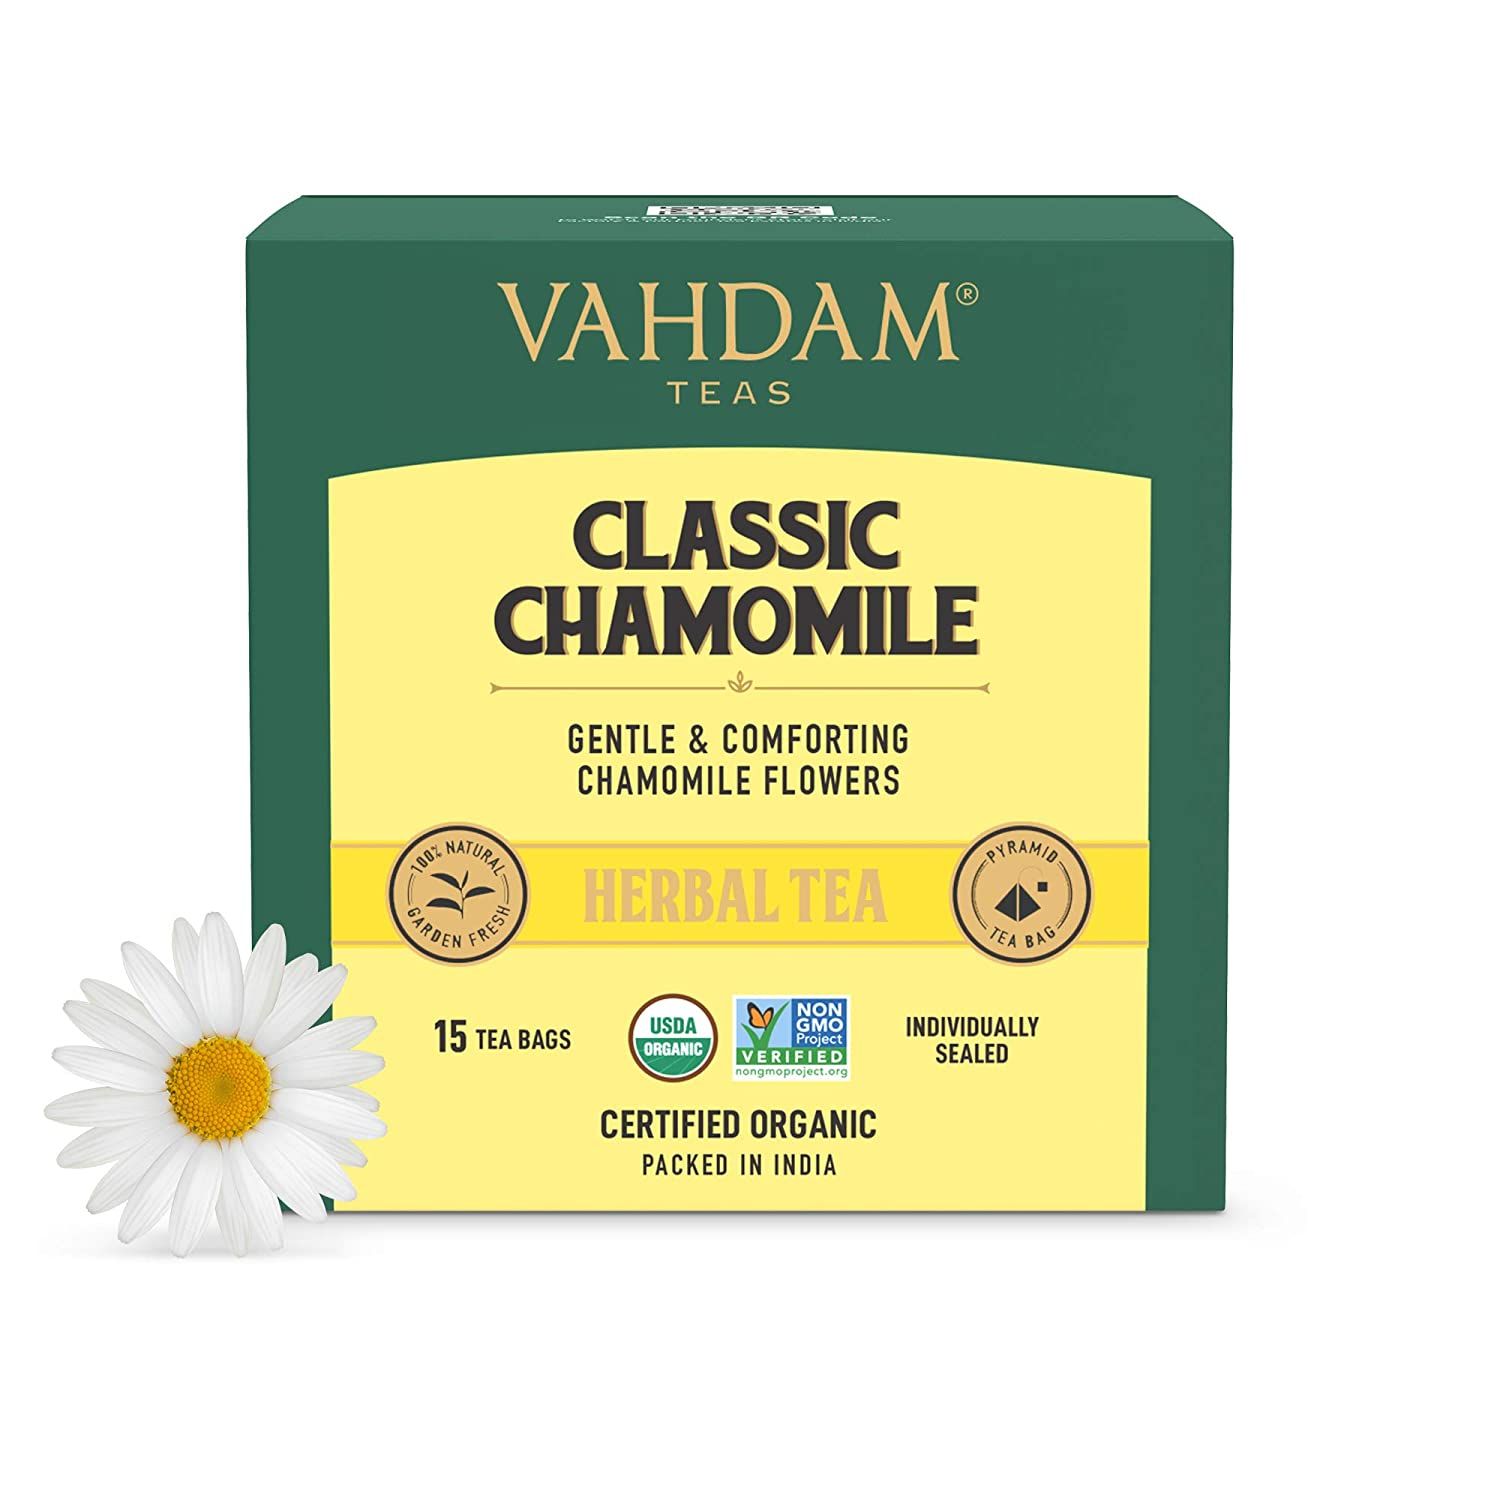 Vahdam Organic Classic Chamomile Tea Bags Image